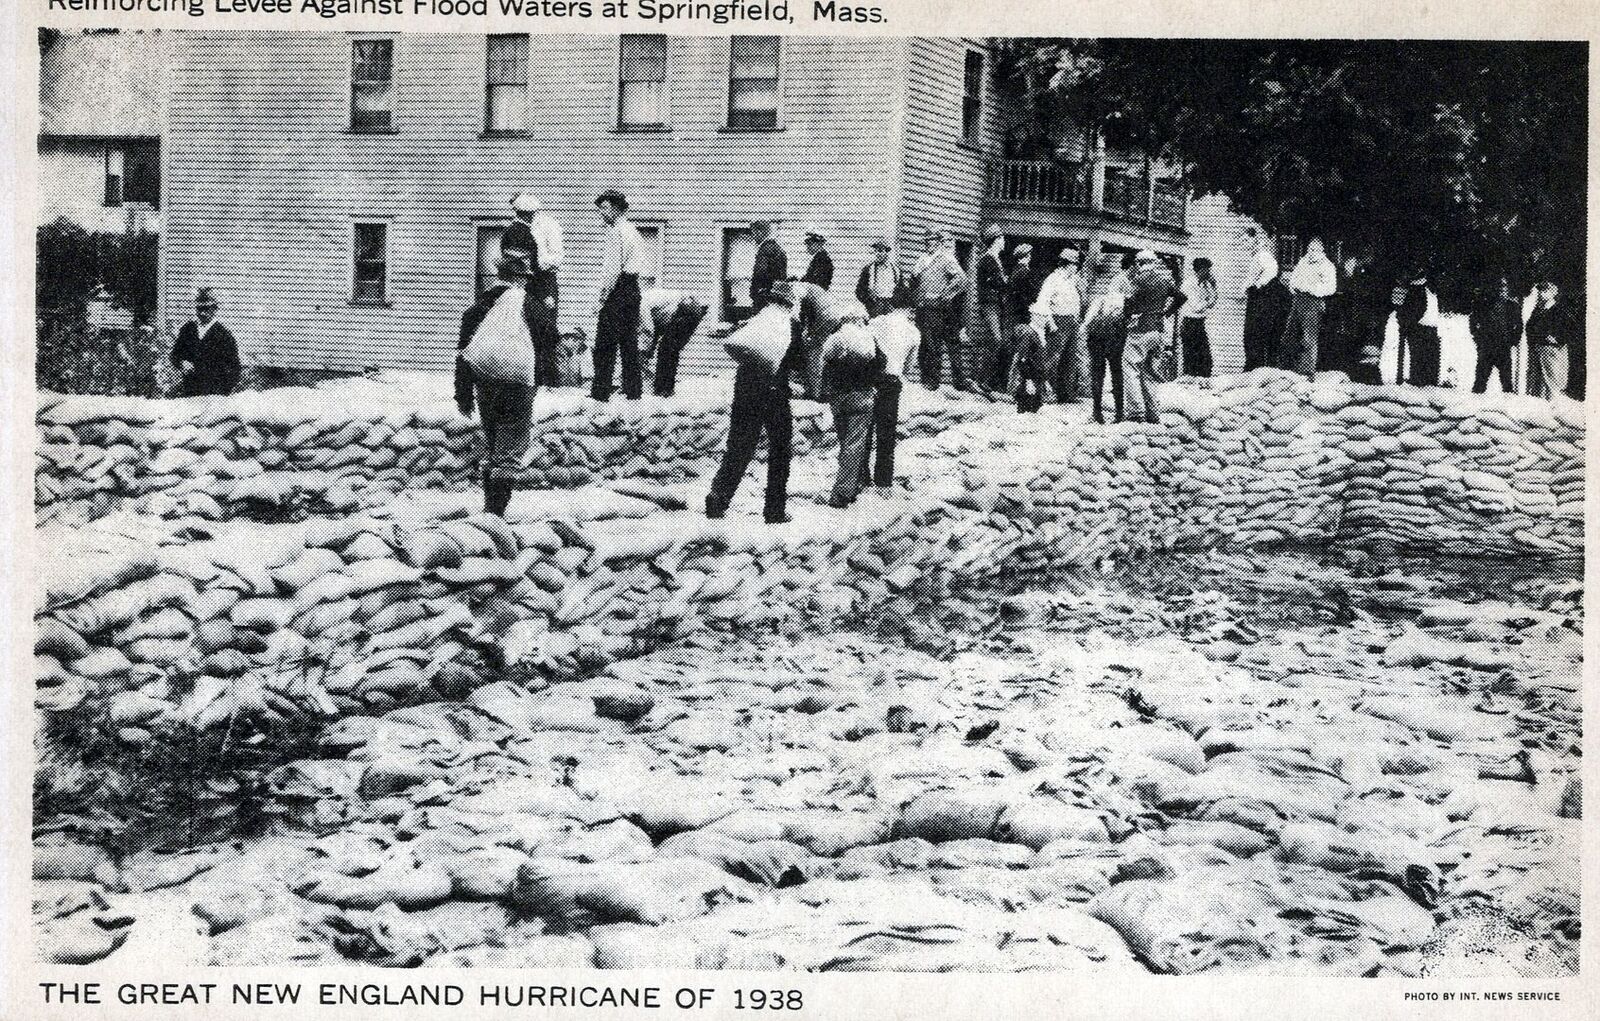 SPRINGFIELD MA - Reinforcing Levee Against Flood Waters 1938 Hurricane Postcard